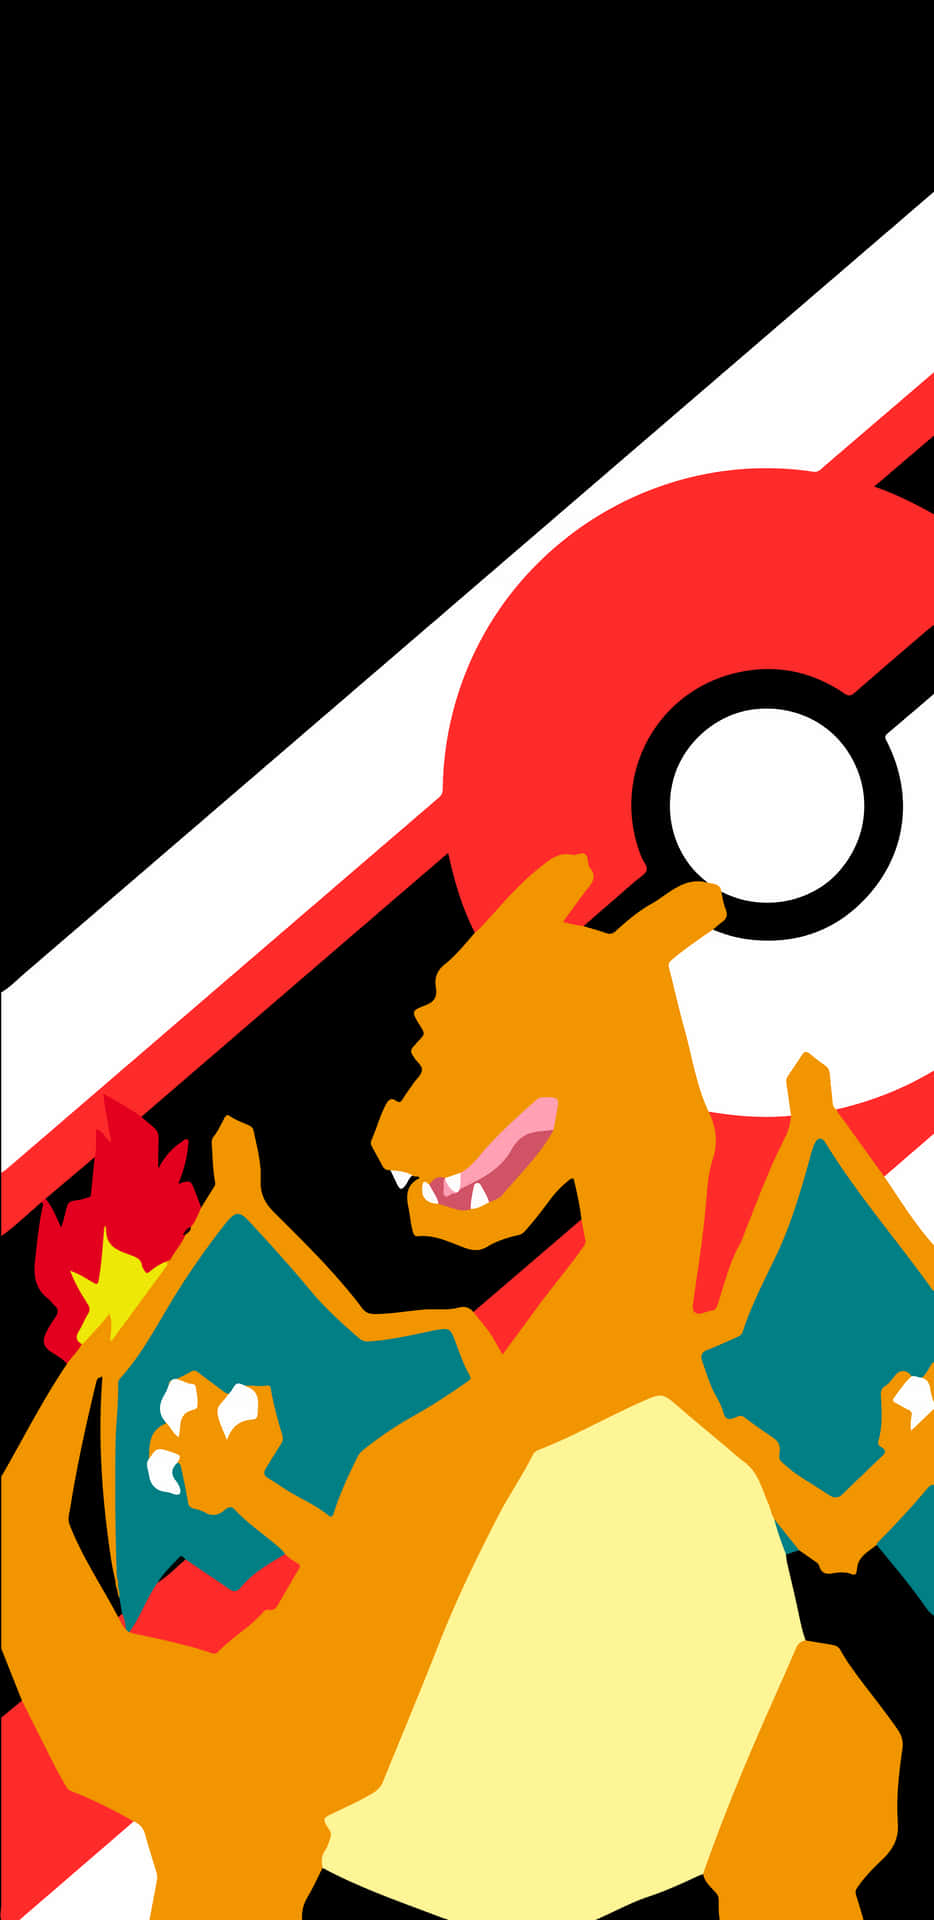 This Legendary Fire-Type Pokemon is Charizard Wallpaper